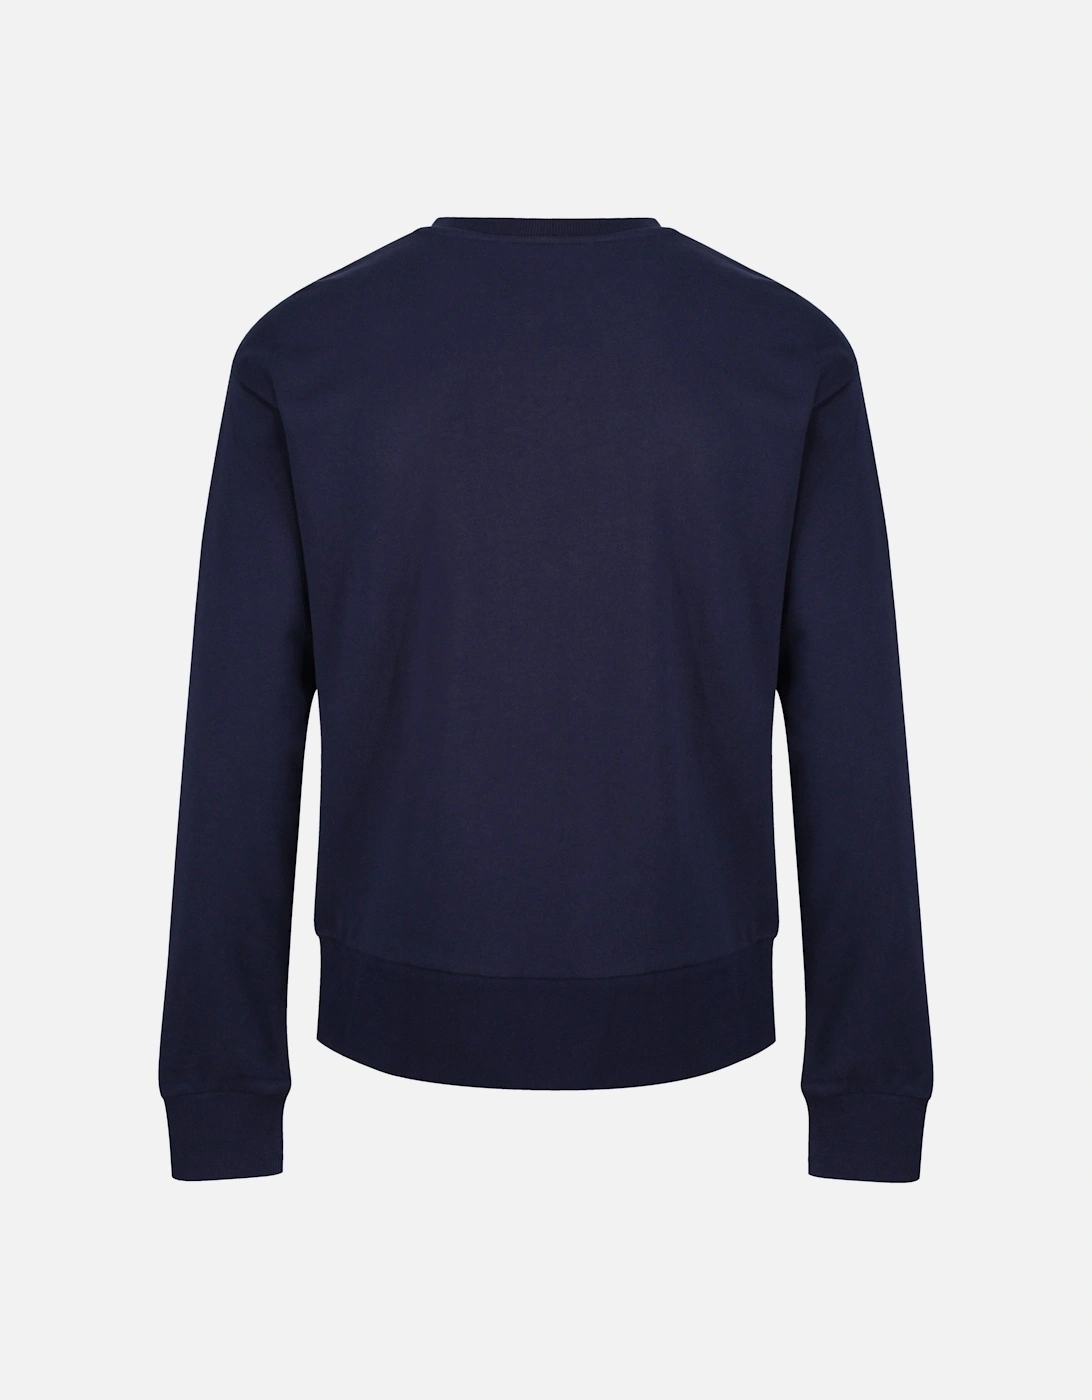 Neil Knitted Rib Cuff Sweatshirt | Navy